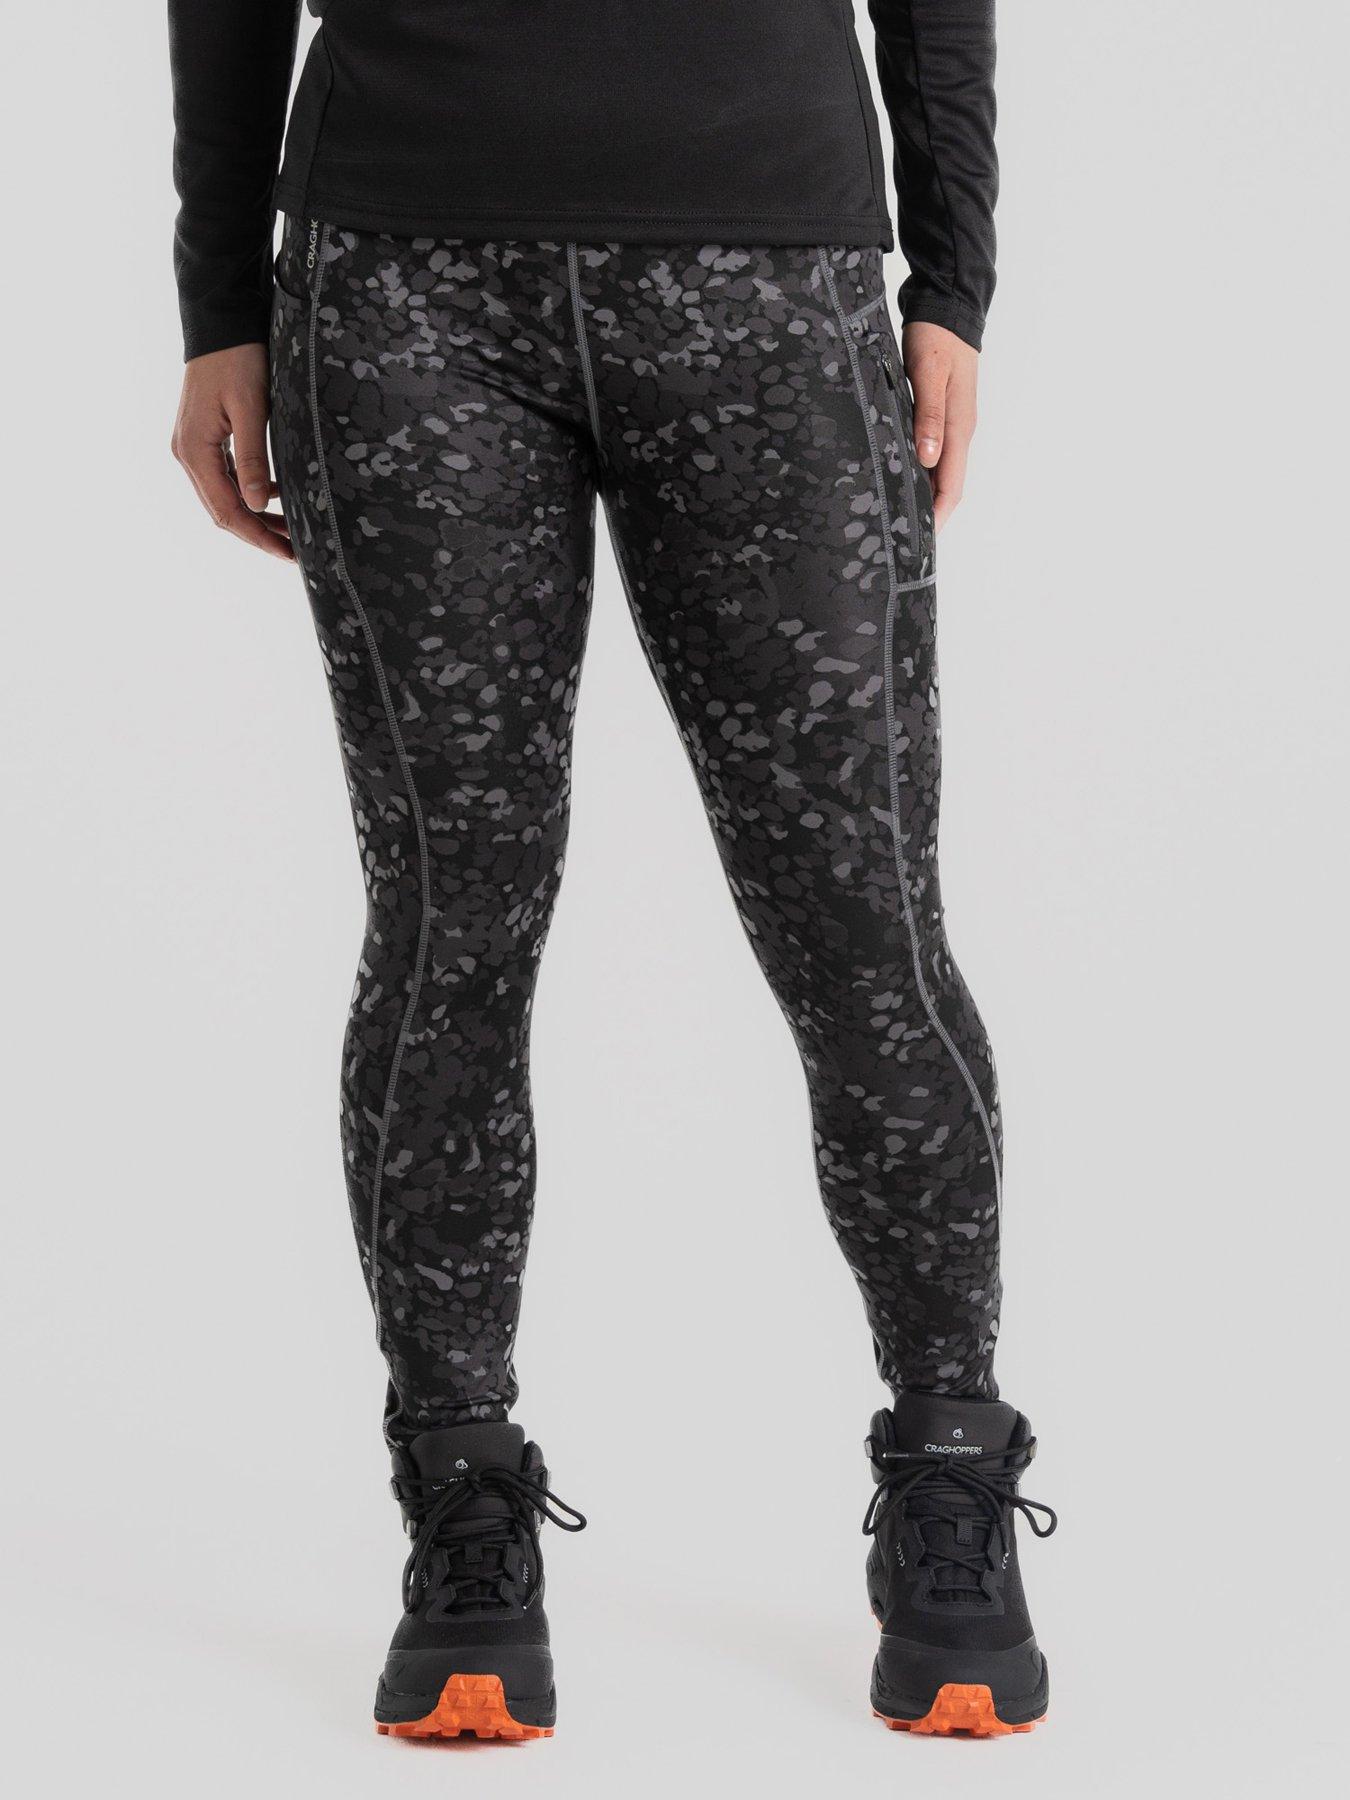 https://media.very.co.uk/i/very/VTTG1_SQ1_0000000005_GREY_MDf/craghoppers-womens-kiwi-pro-leggings-grey-print.jpg?$200x200_socialshare$